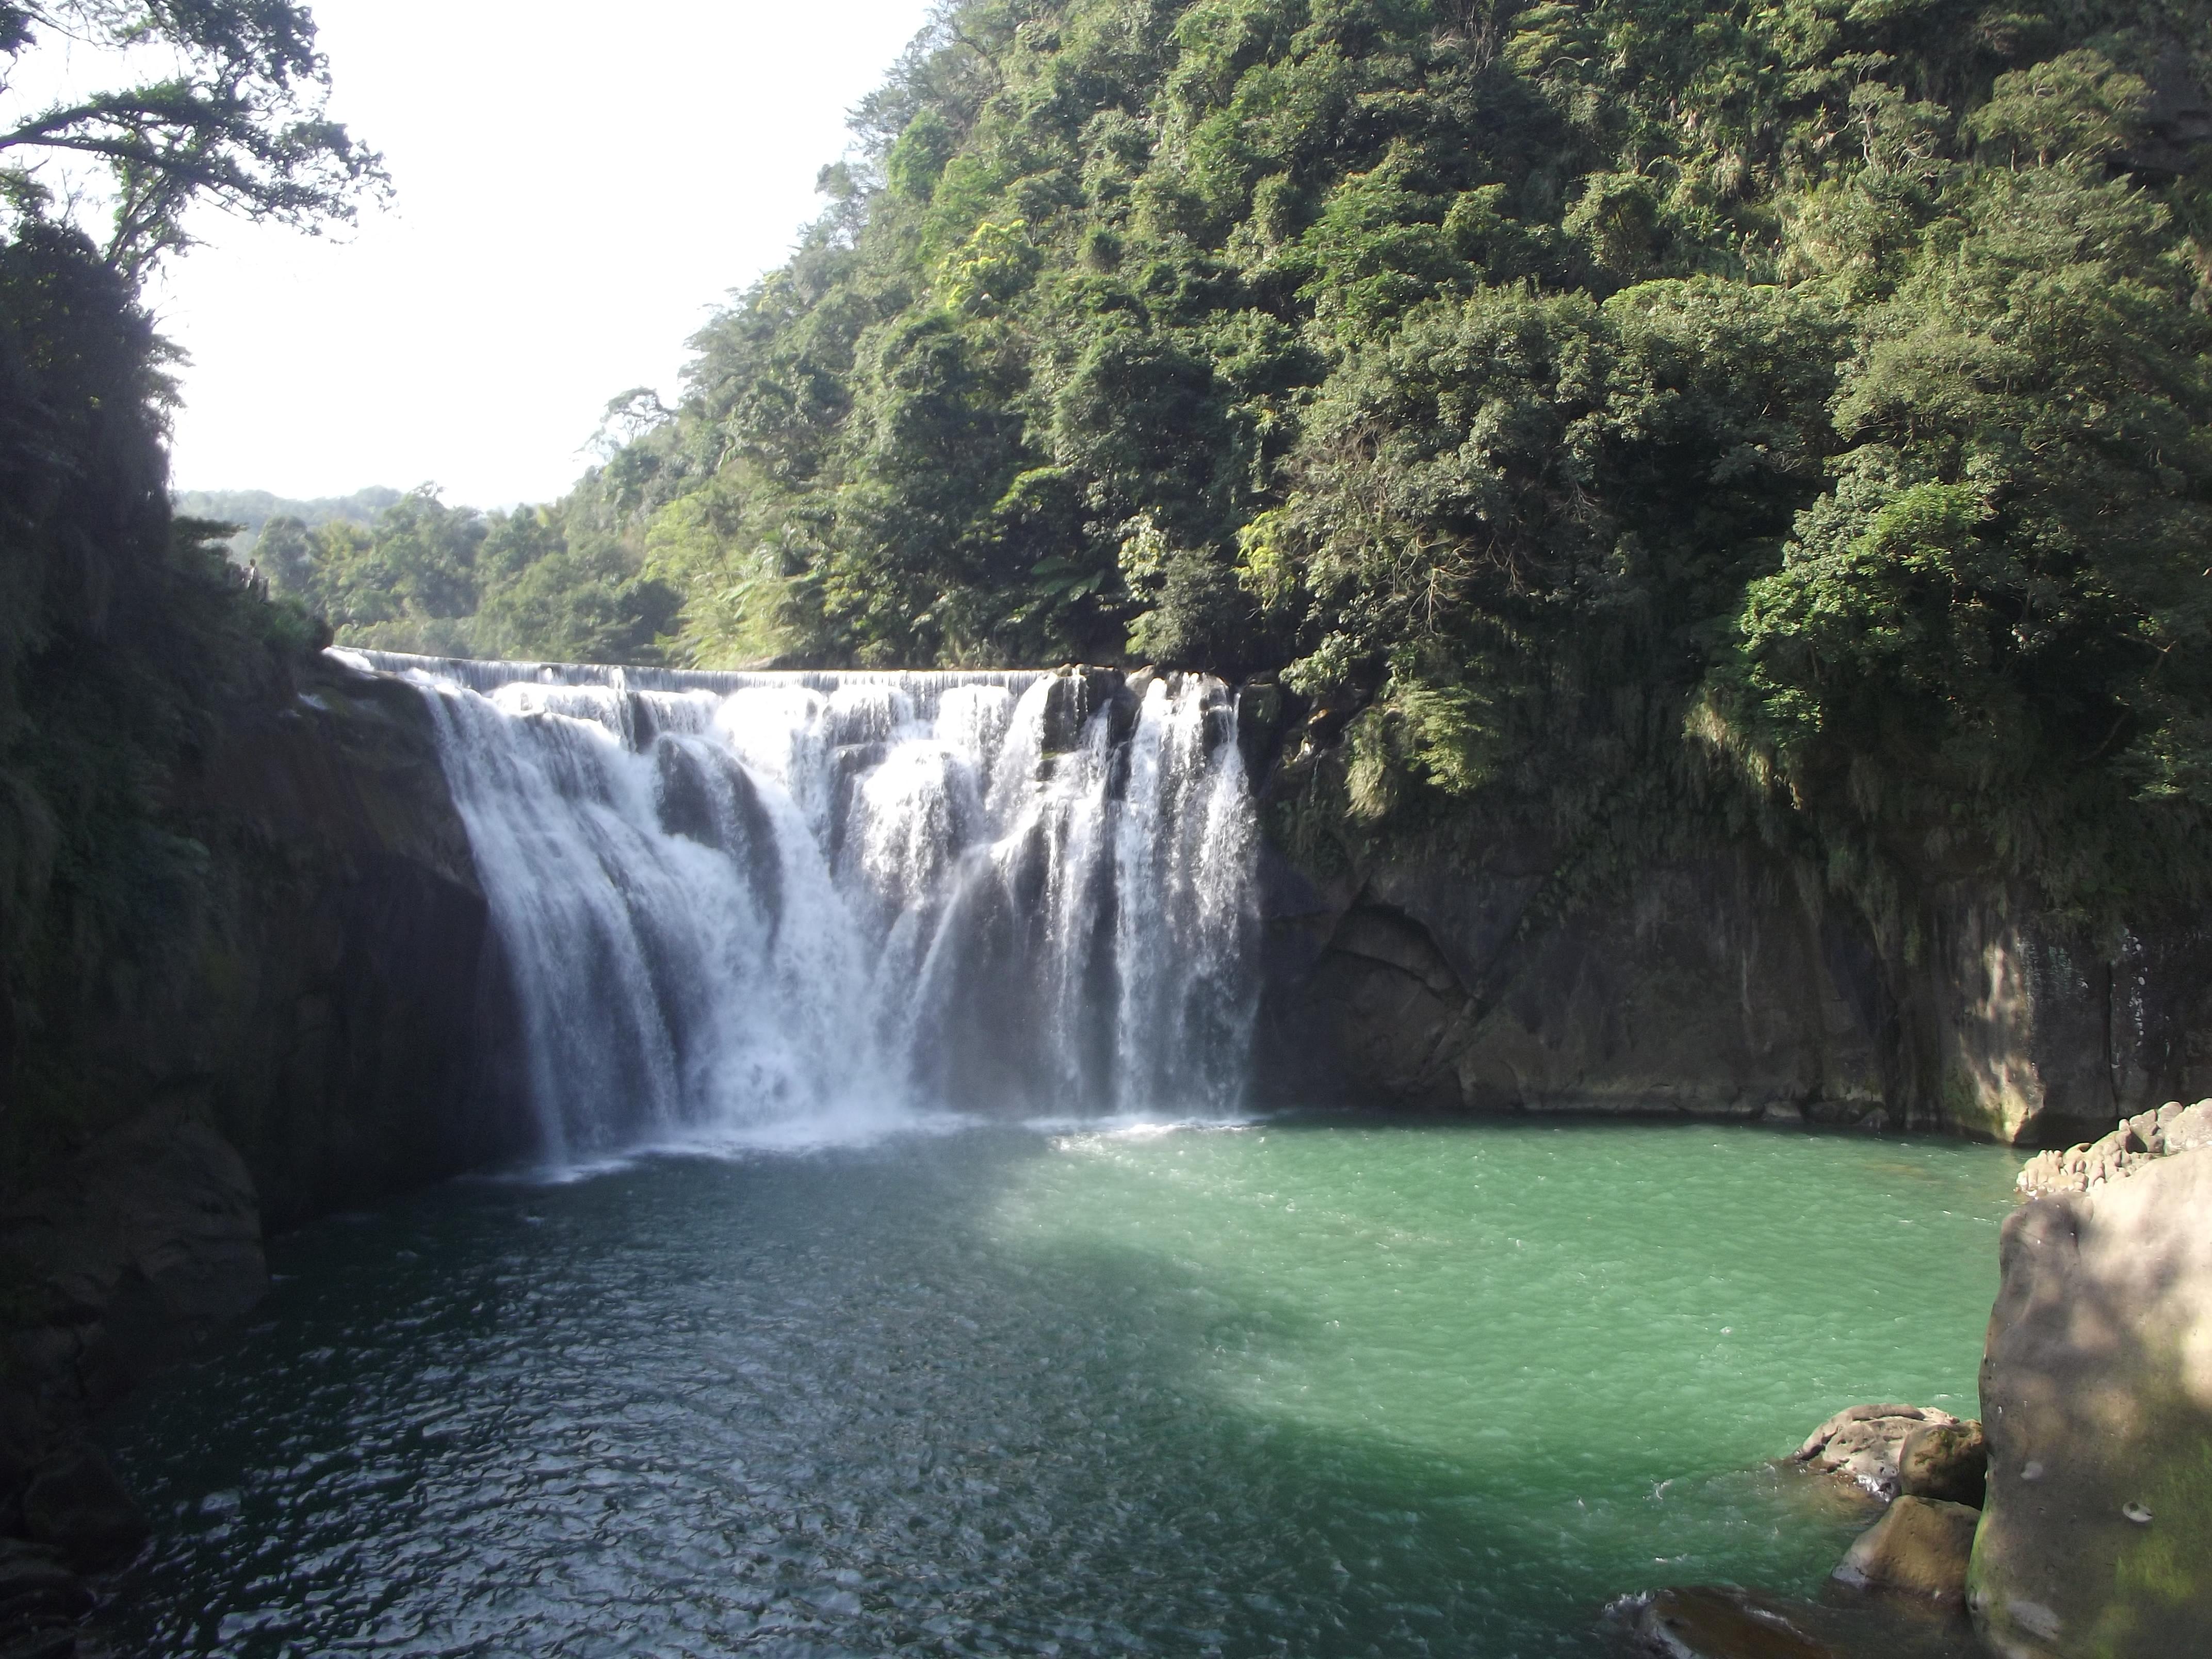 Shifen Waterfall (十分大瀑布).